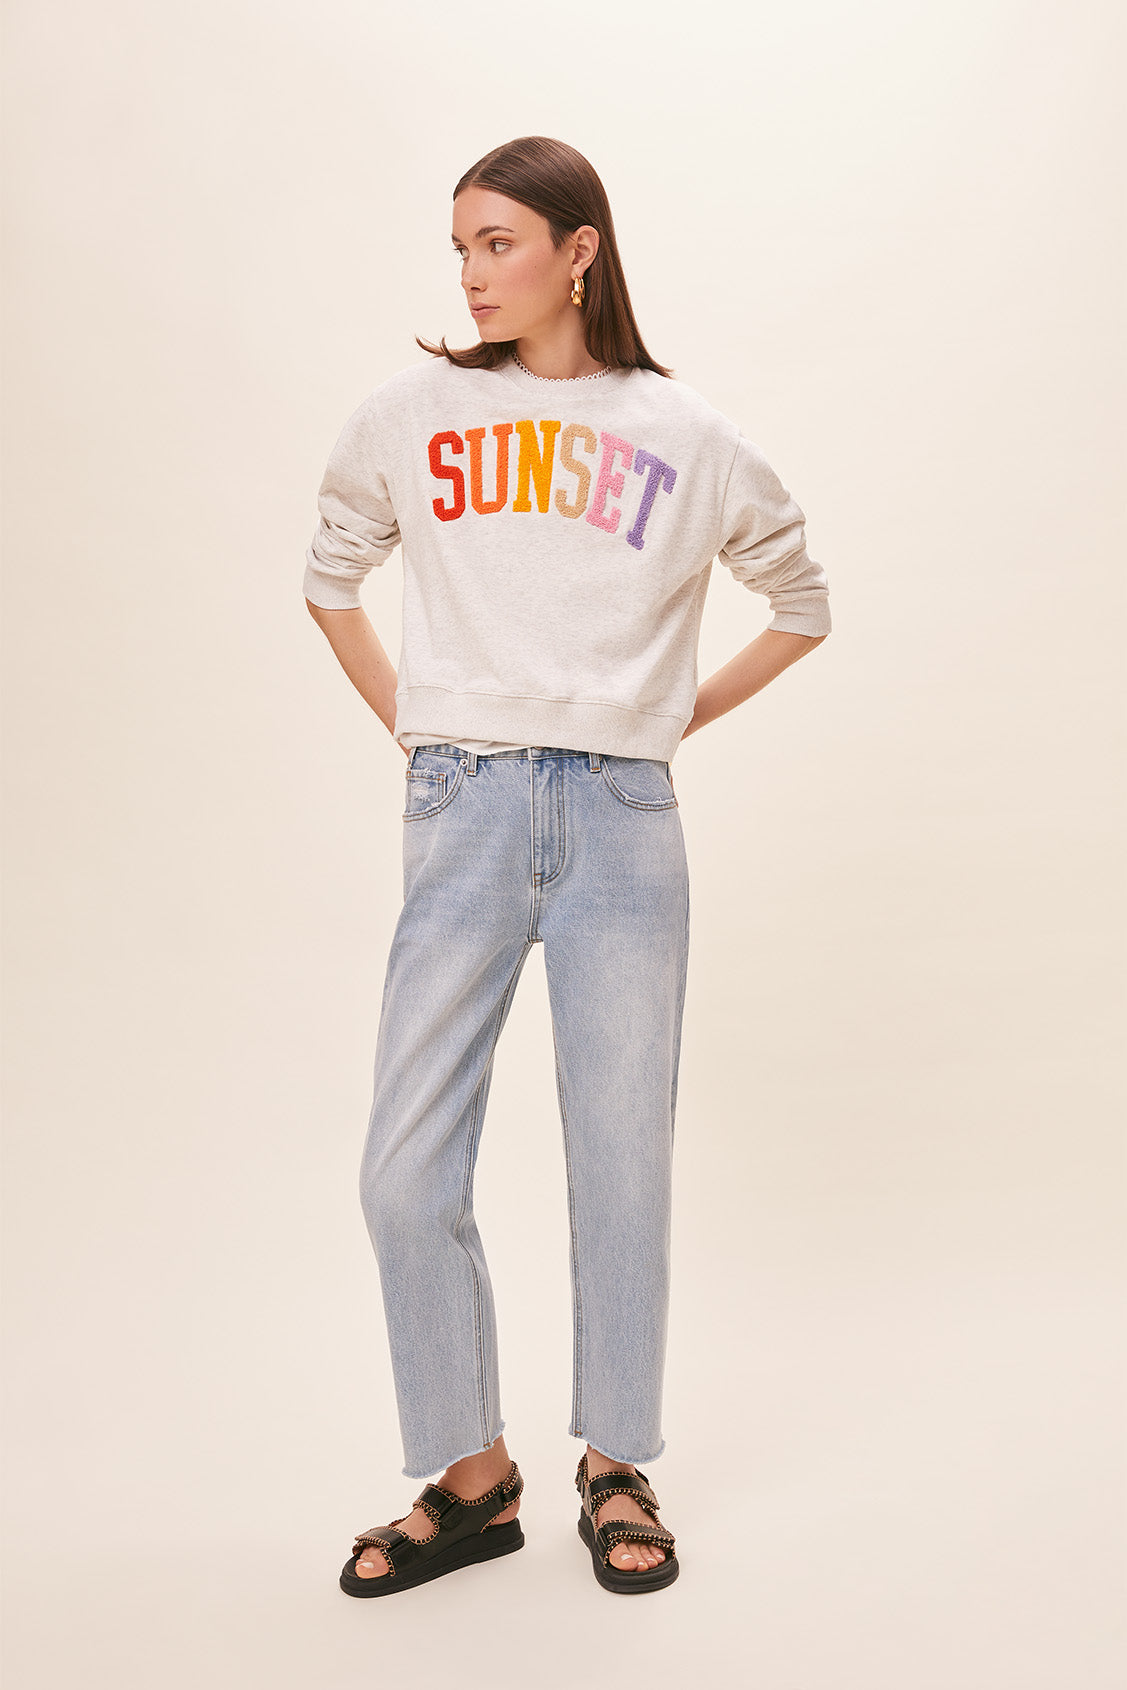 Sunset Sweater - Suncoo